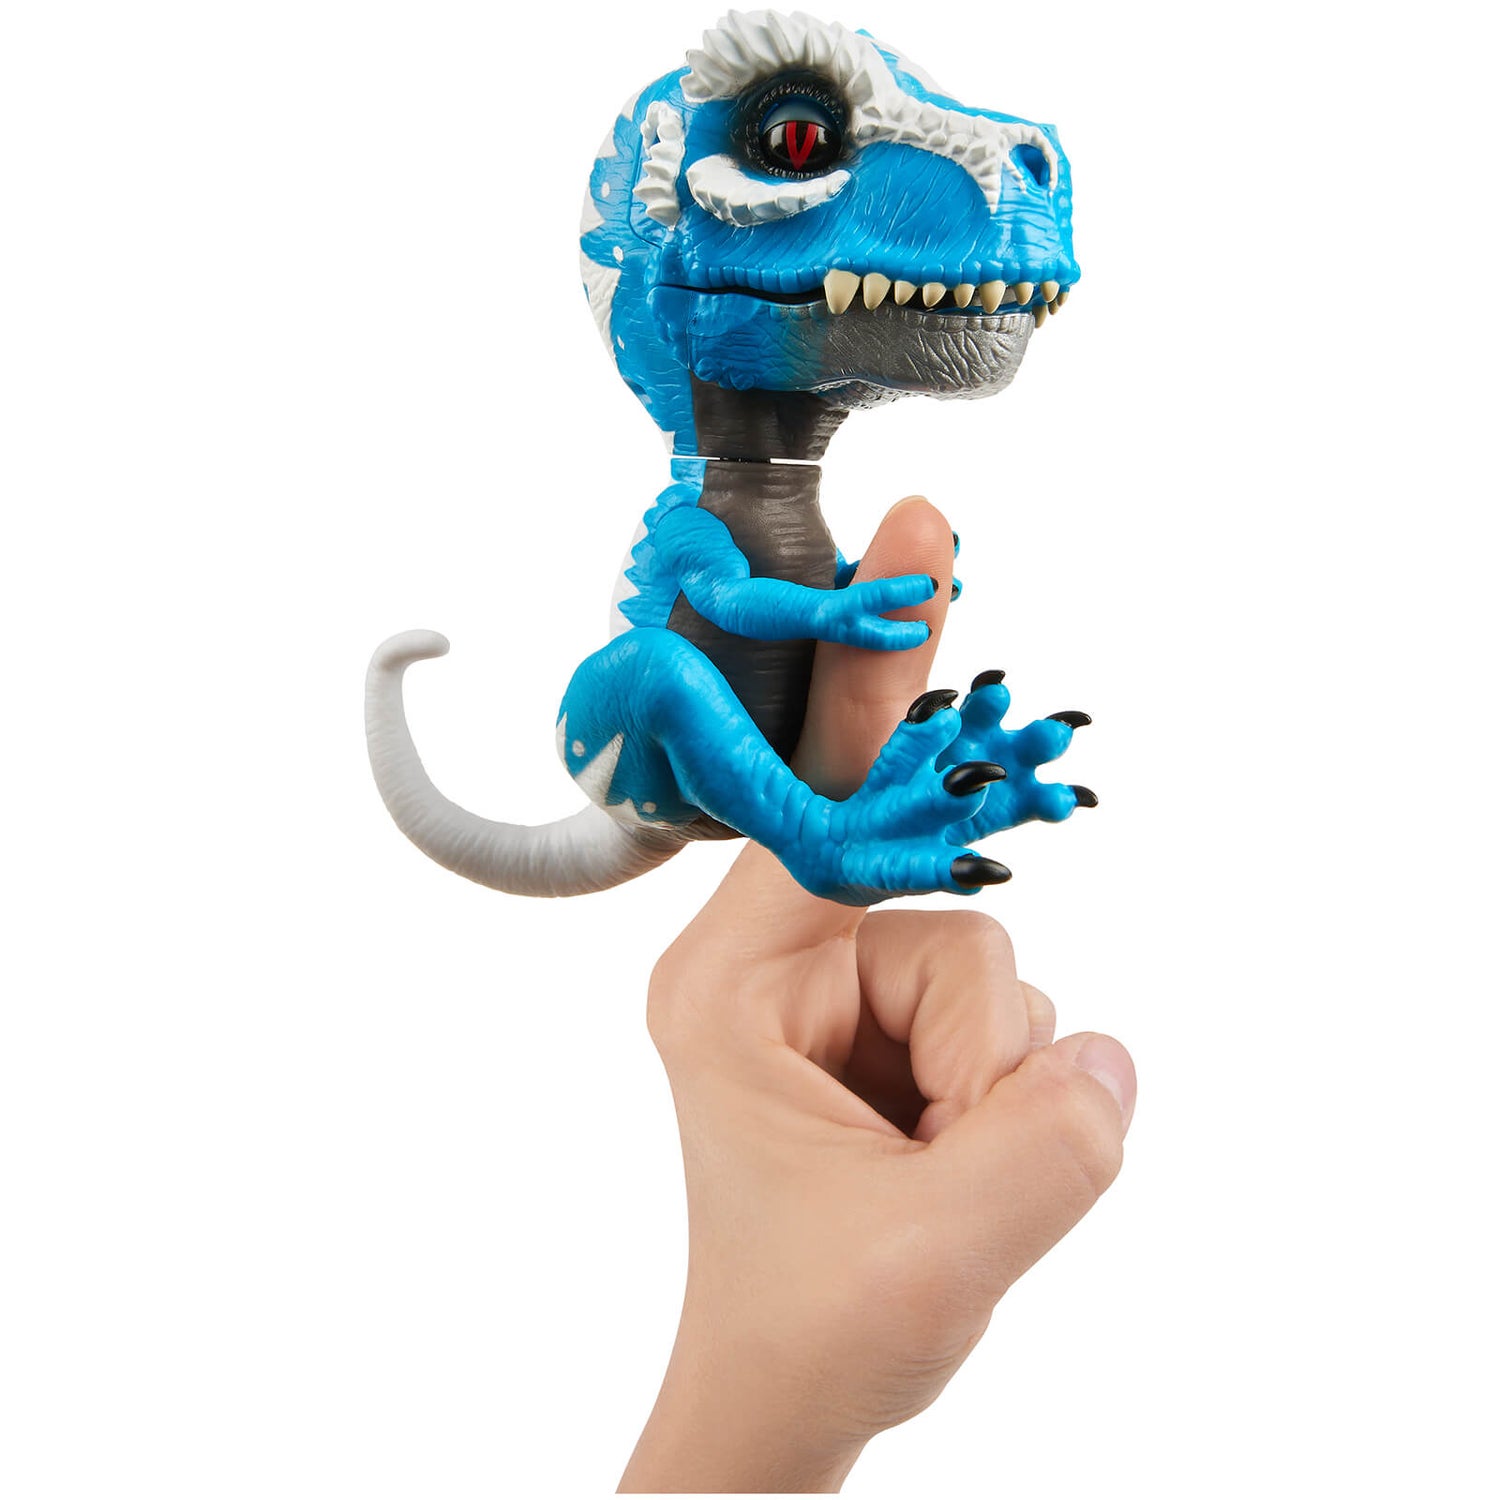 Fingerlings Bébé Dinosaure Interactif - Bleu Toys